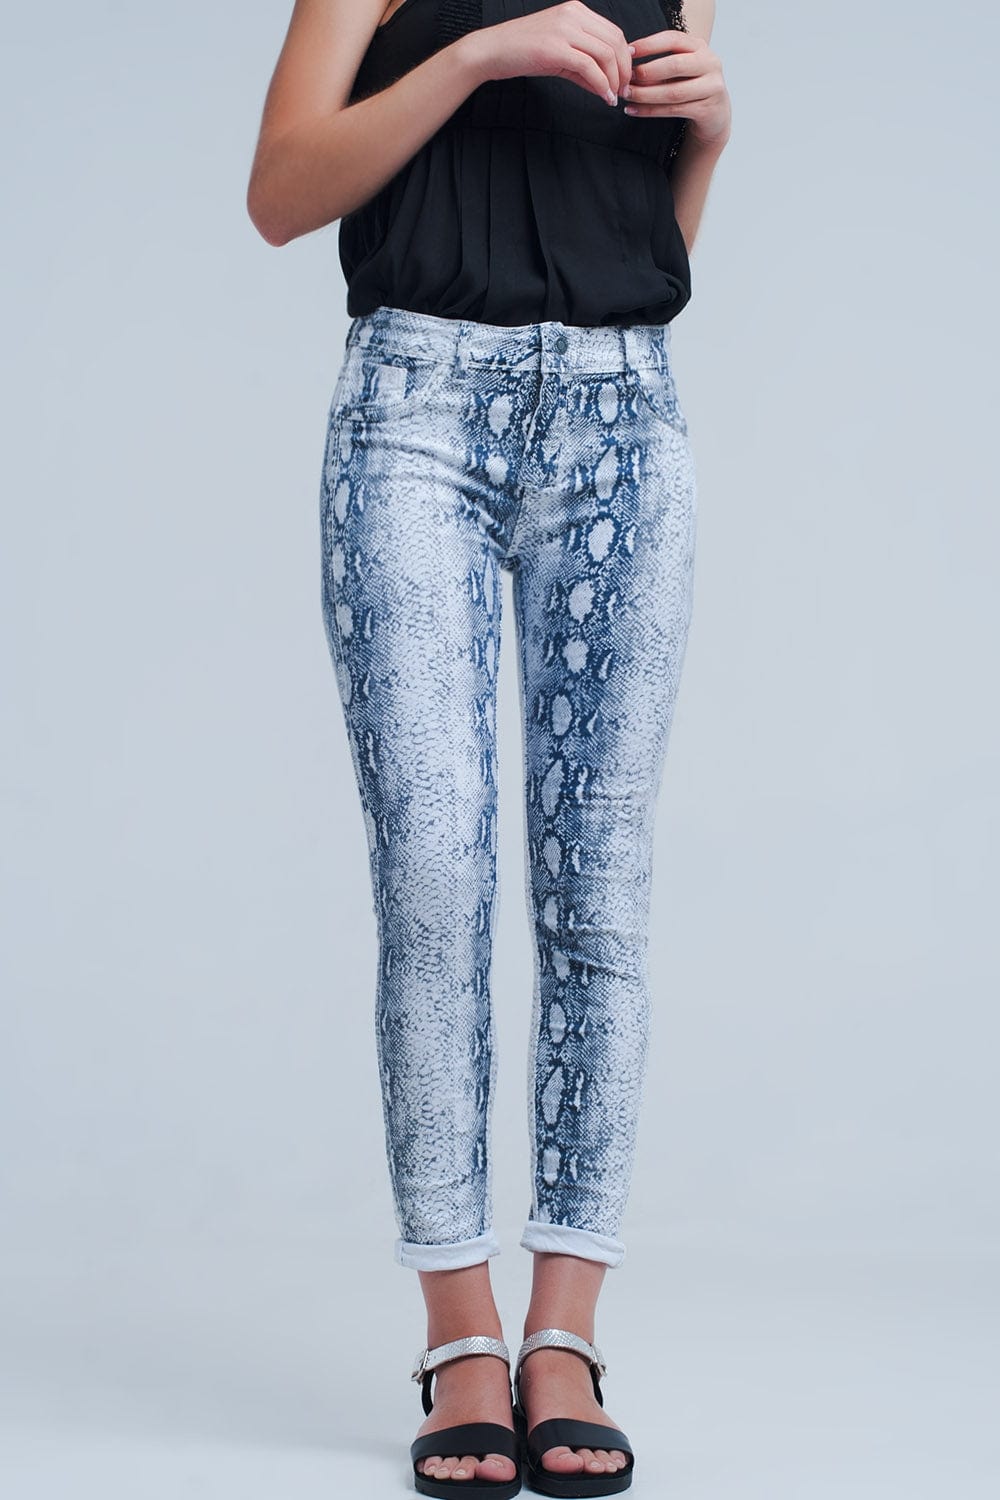 Q2 Women's Jean White Reversible Jeans